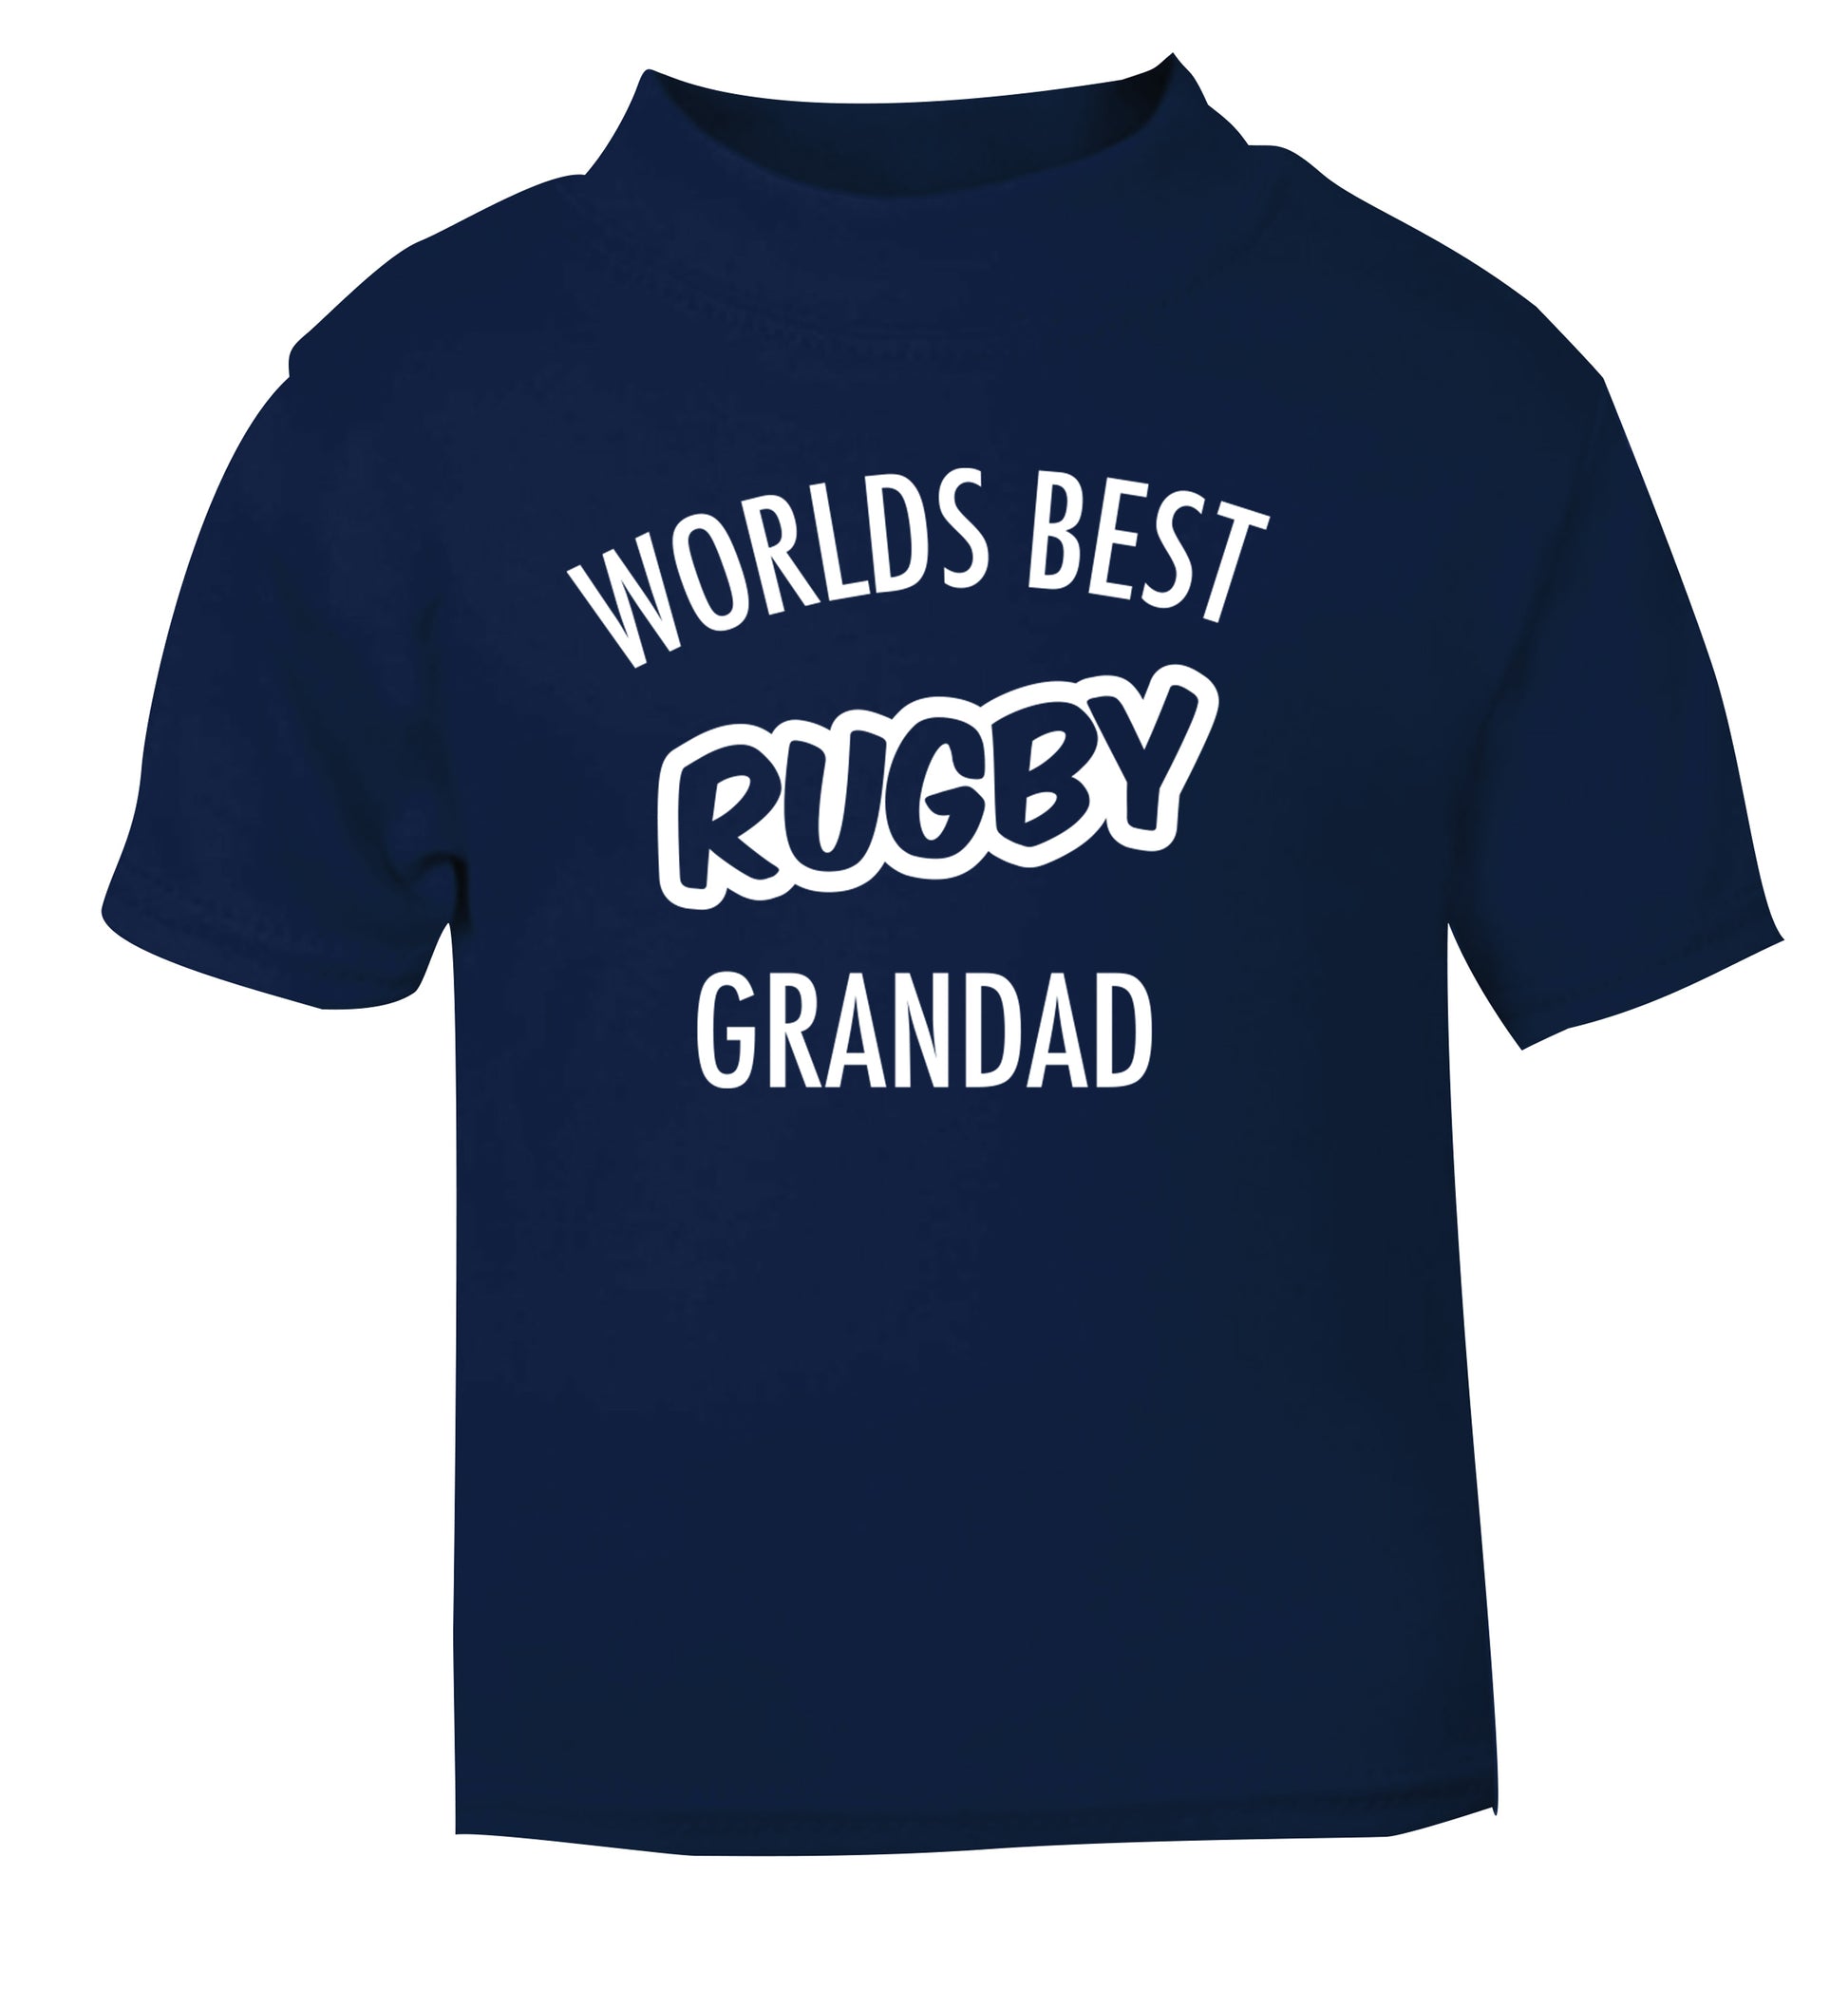 Worlds best rugby grandad navy Baby Toddler Tshirt 2 Years